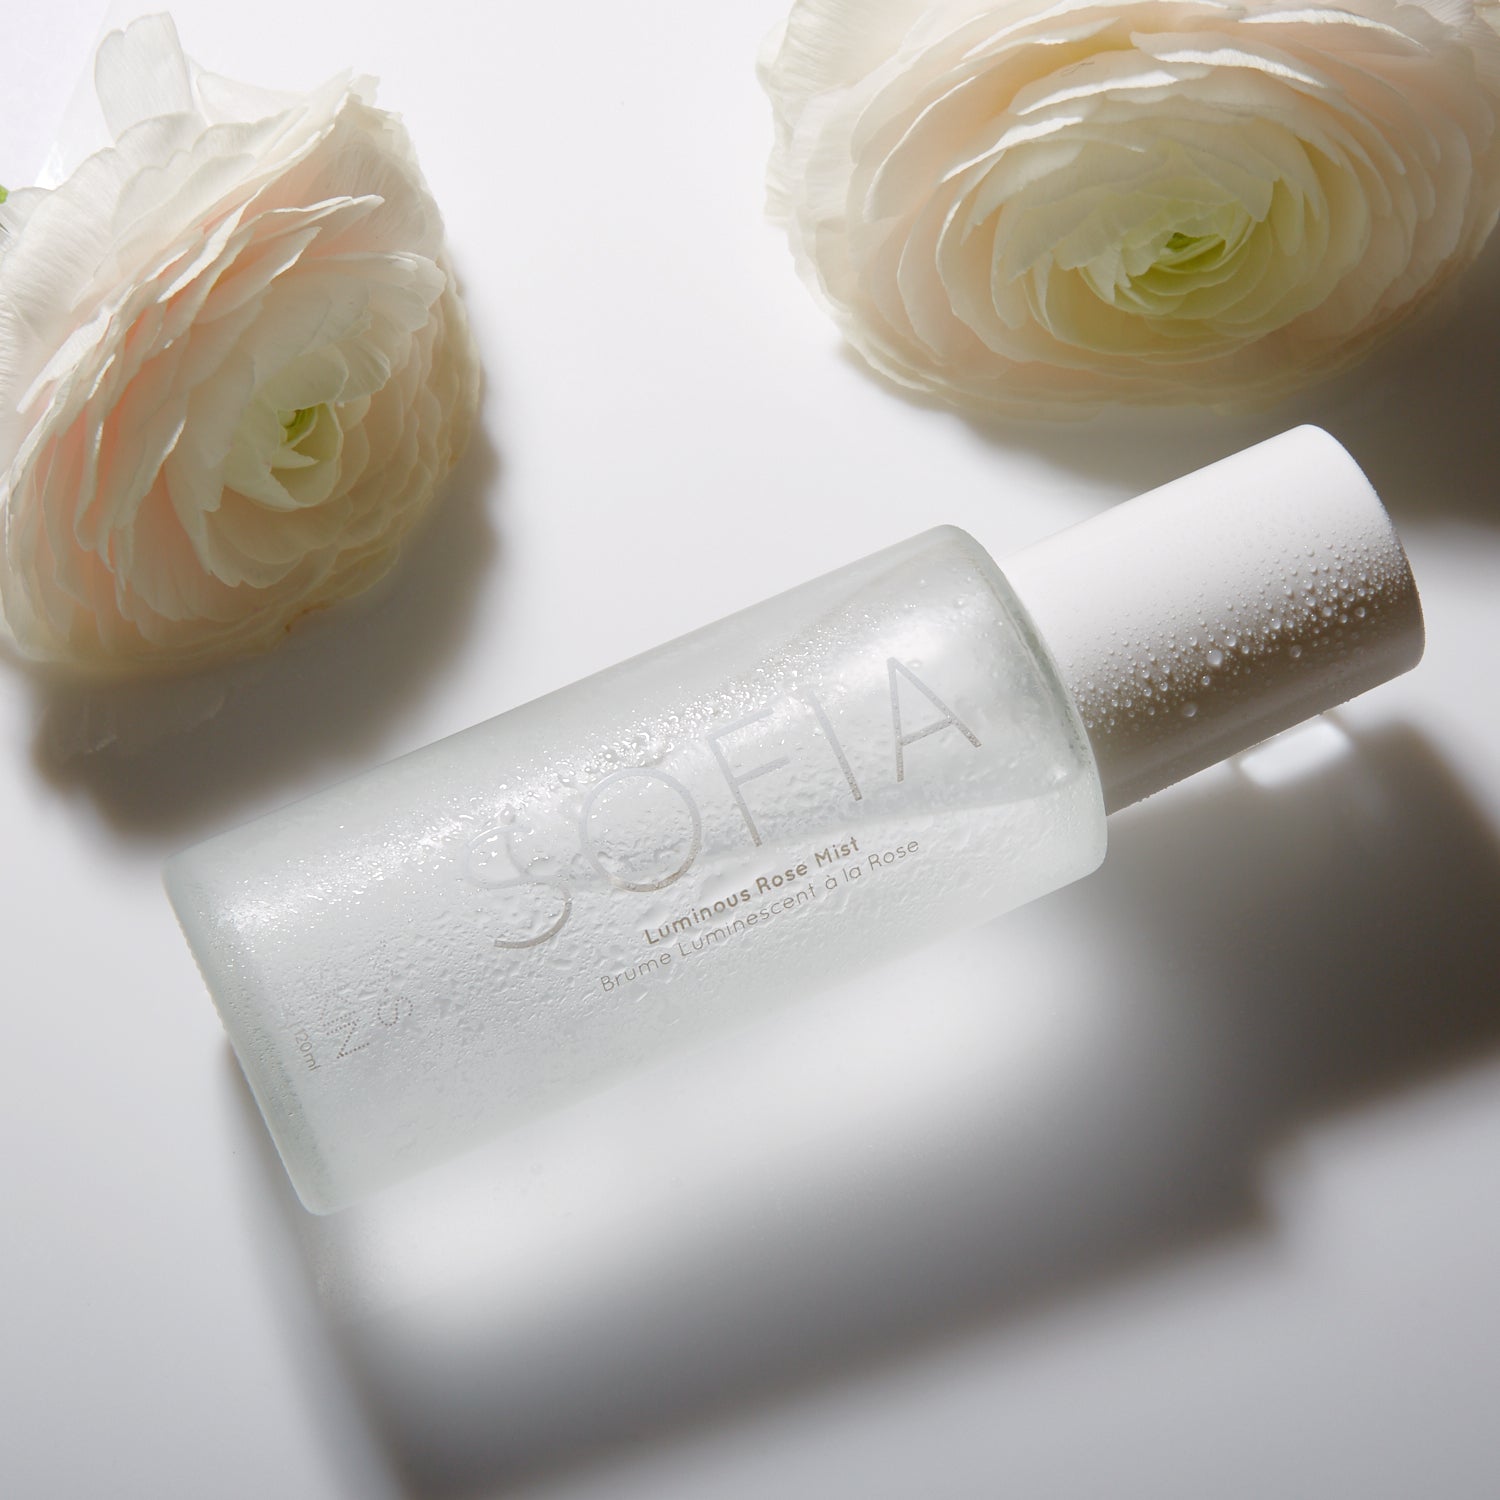  SOFIA | Luminous Rose Mist Mullein and Sparrow Perfumarie